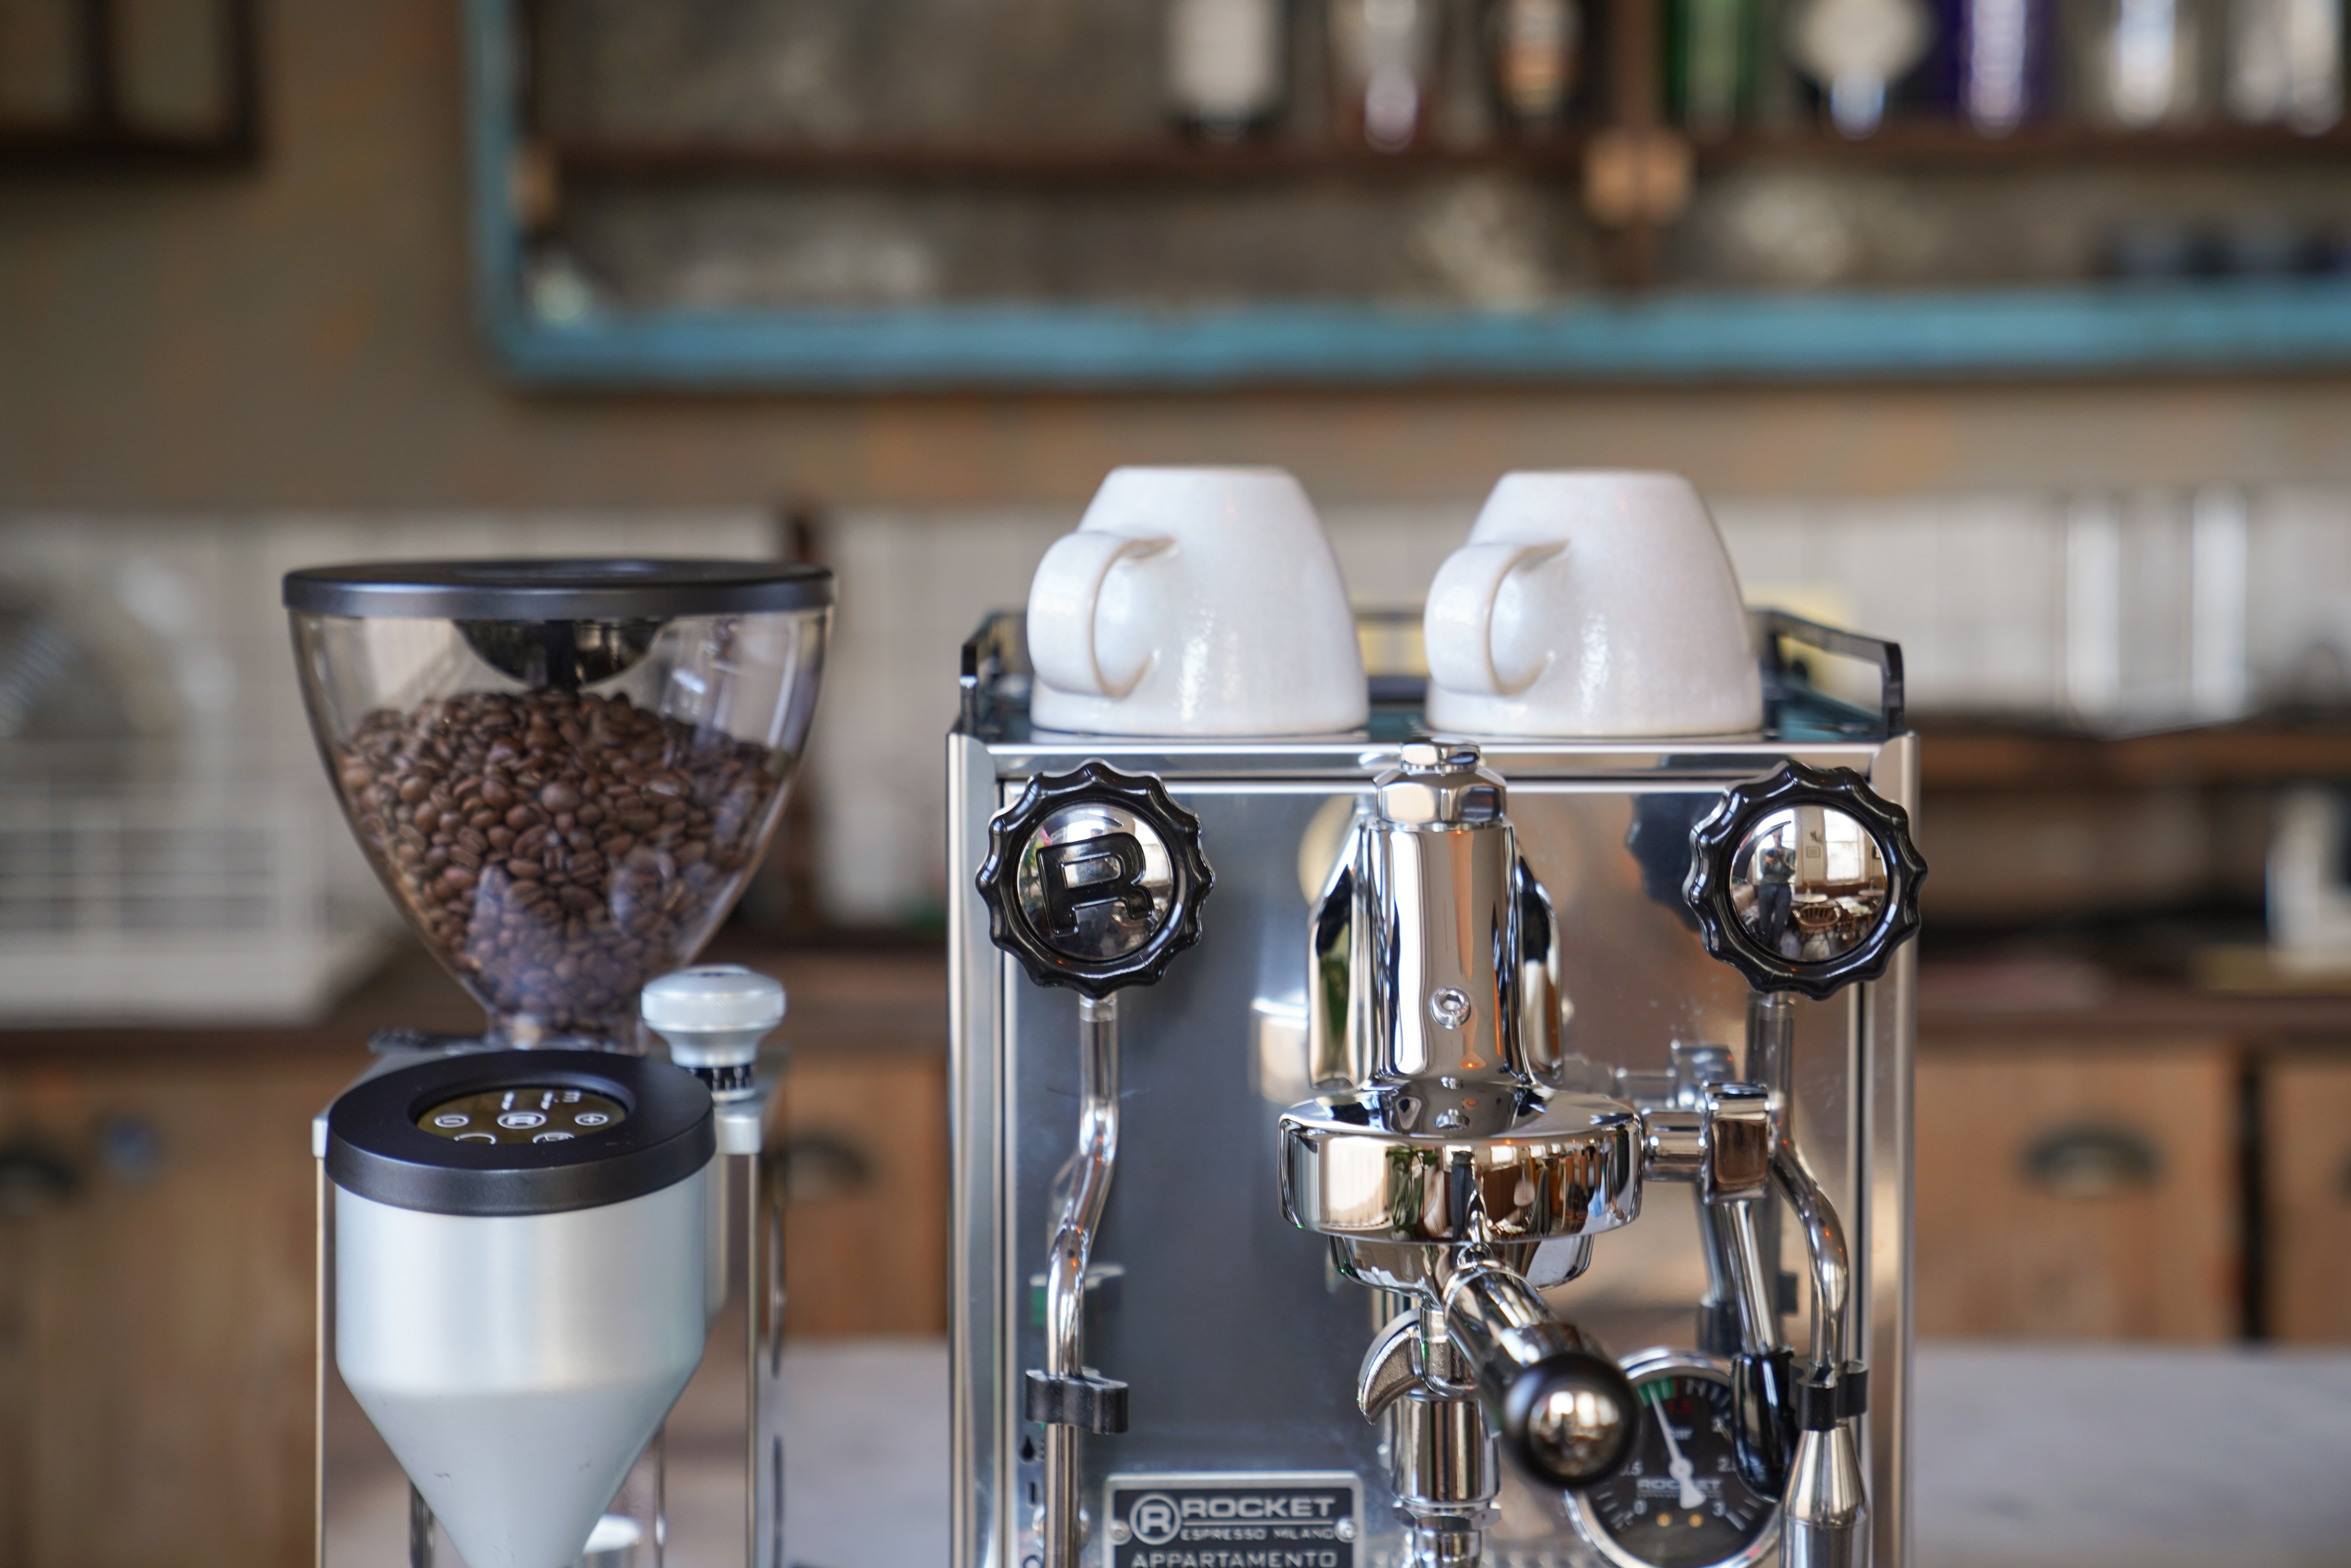 Extract Coffee Roasters Rocket Appartamento Espresso Machine and Rocket Faustino Coffee grinder